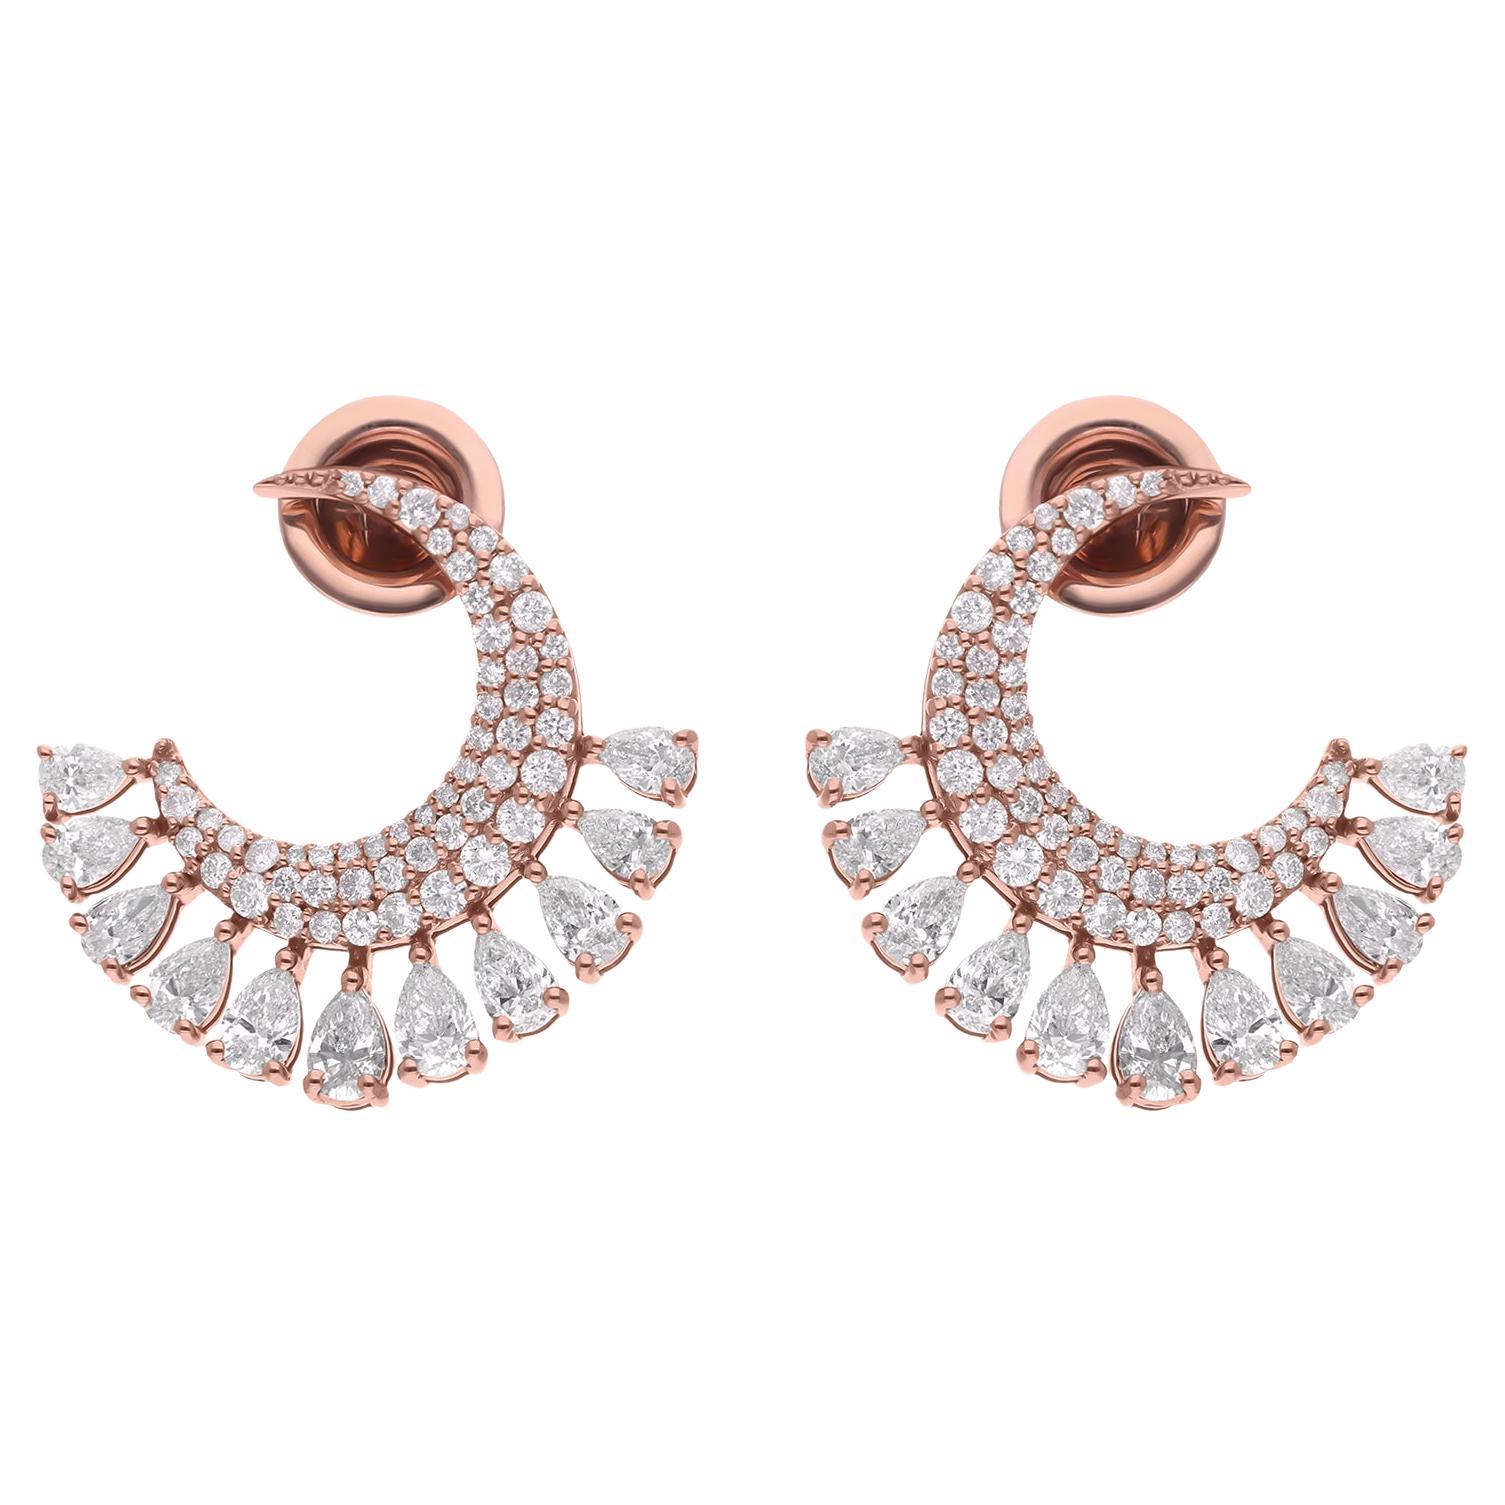 Pear & Round Diamond Crescent Moon Earrings 18 Karat Rose Gold Handmade Jewelry